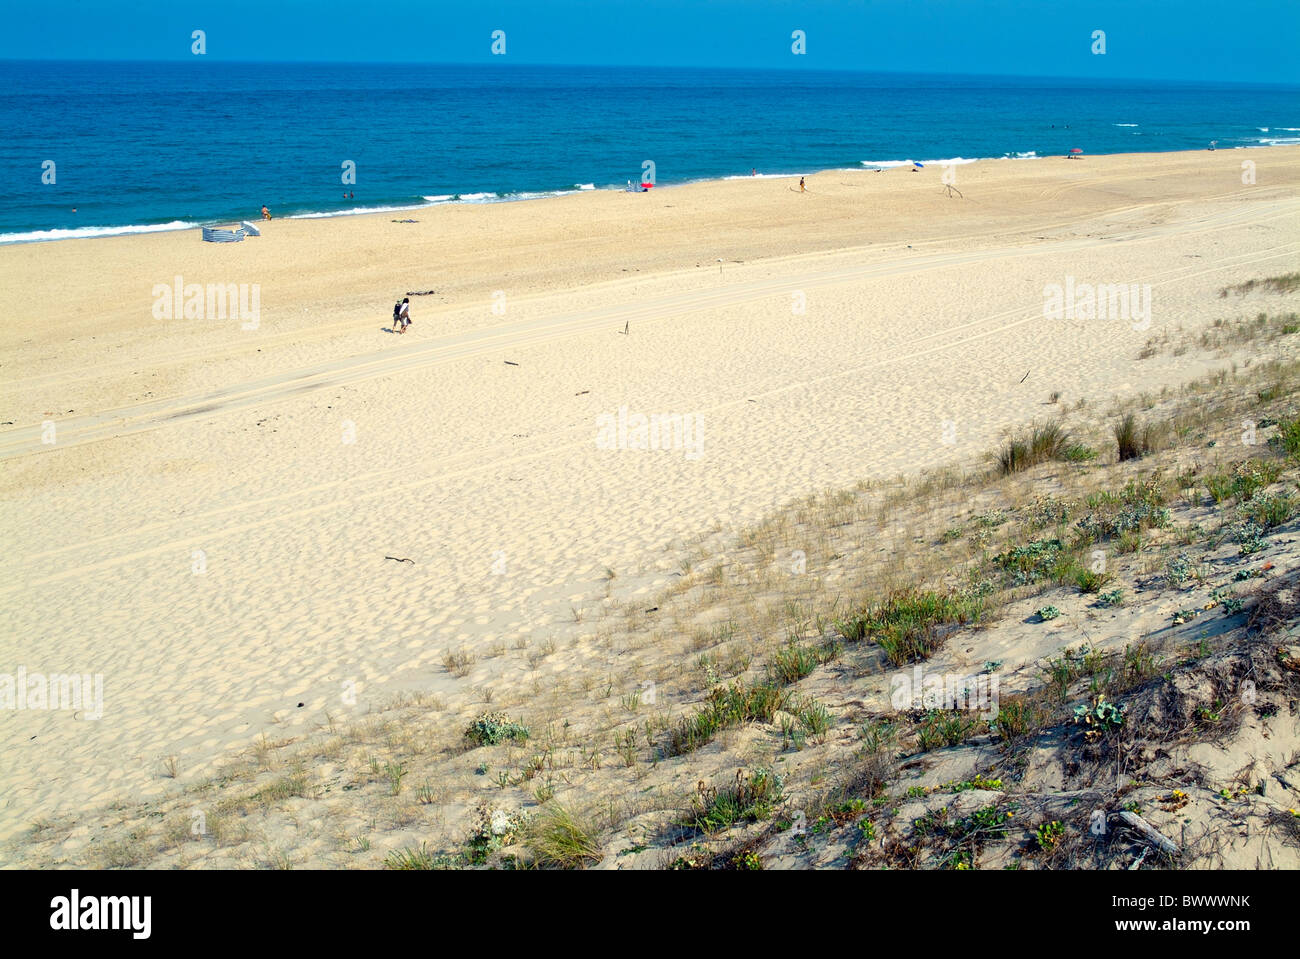 The beach at Le Porge, Gironde, France - near Bordeaux. Stock Photo